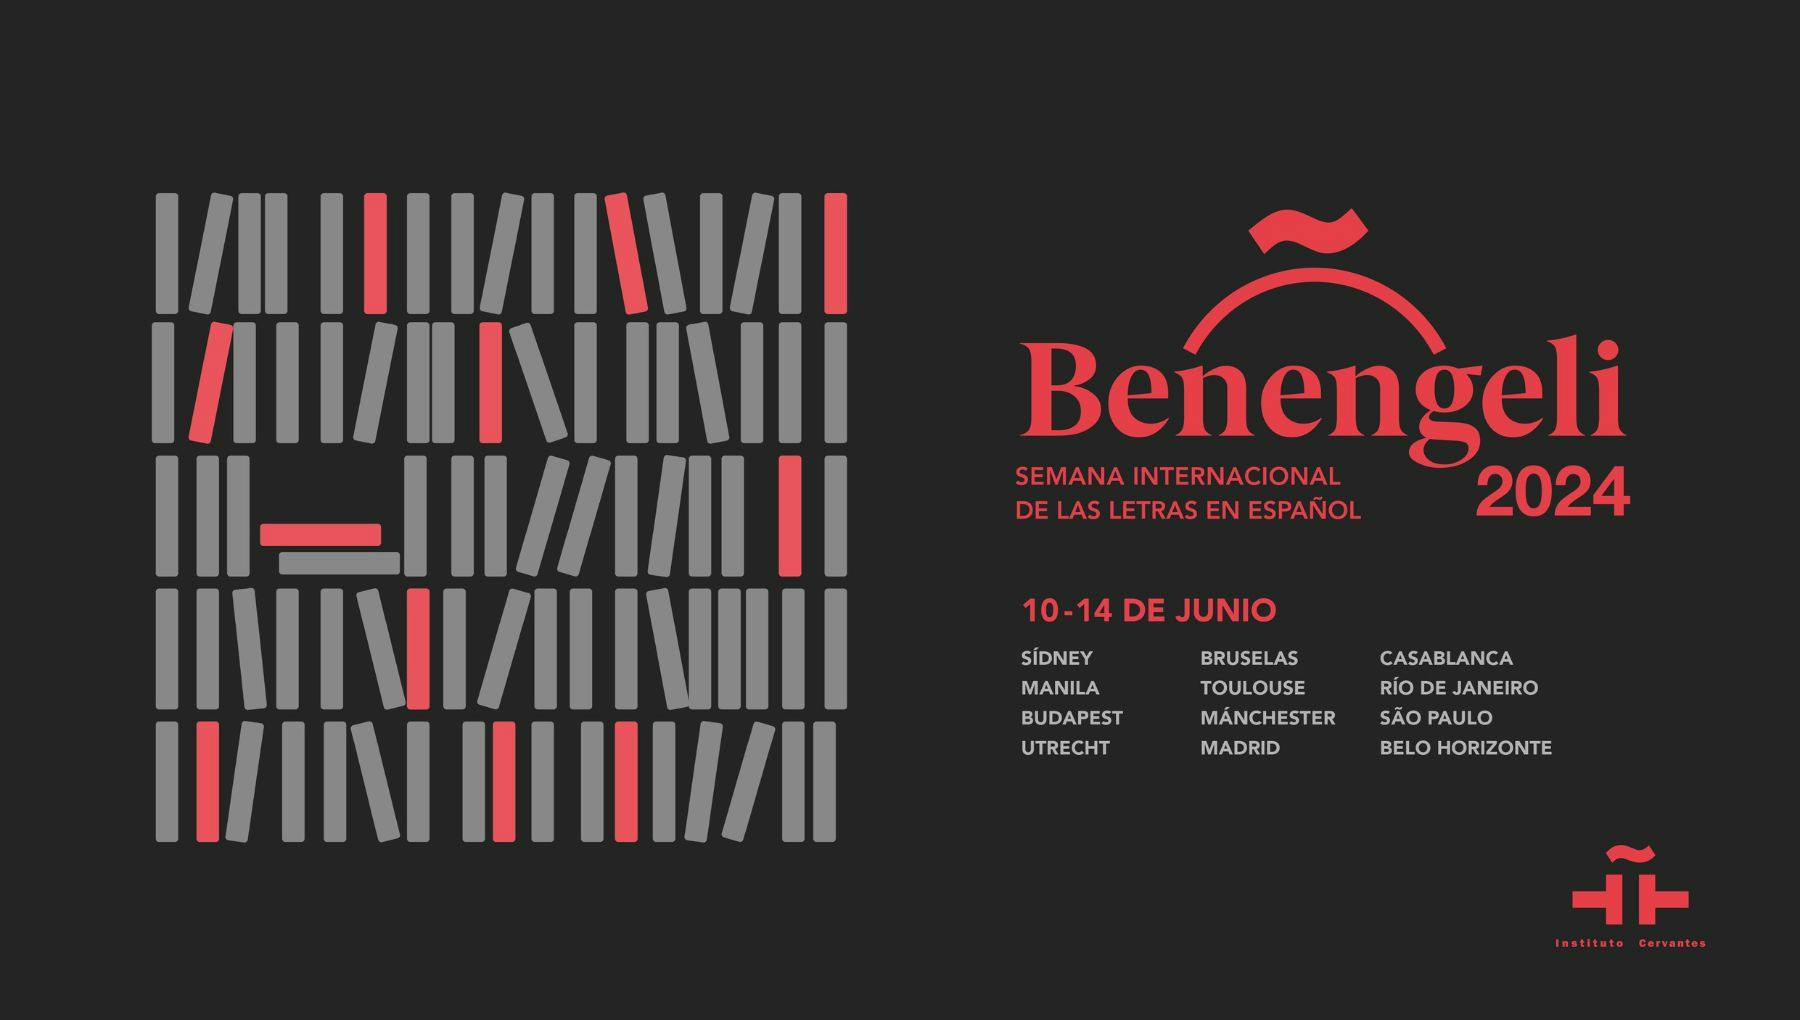 Benengeli festival 2024: International week on Literature in Spanish